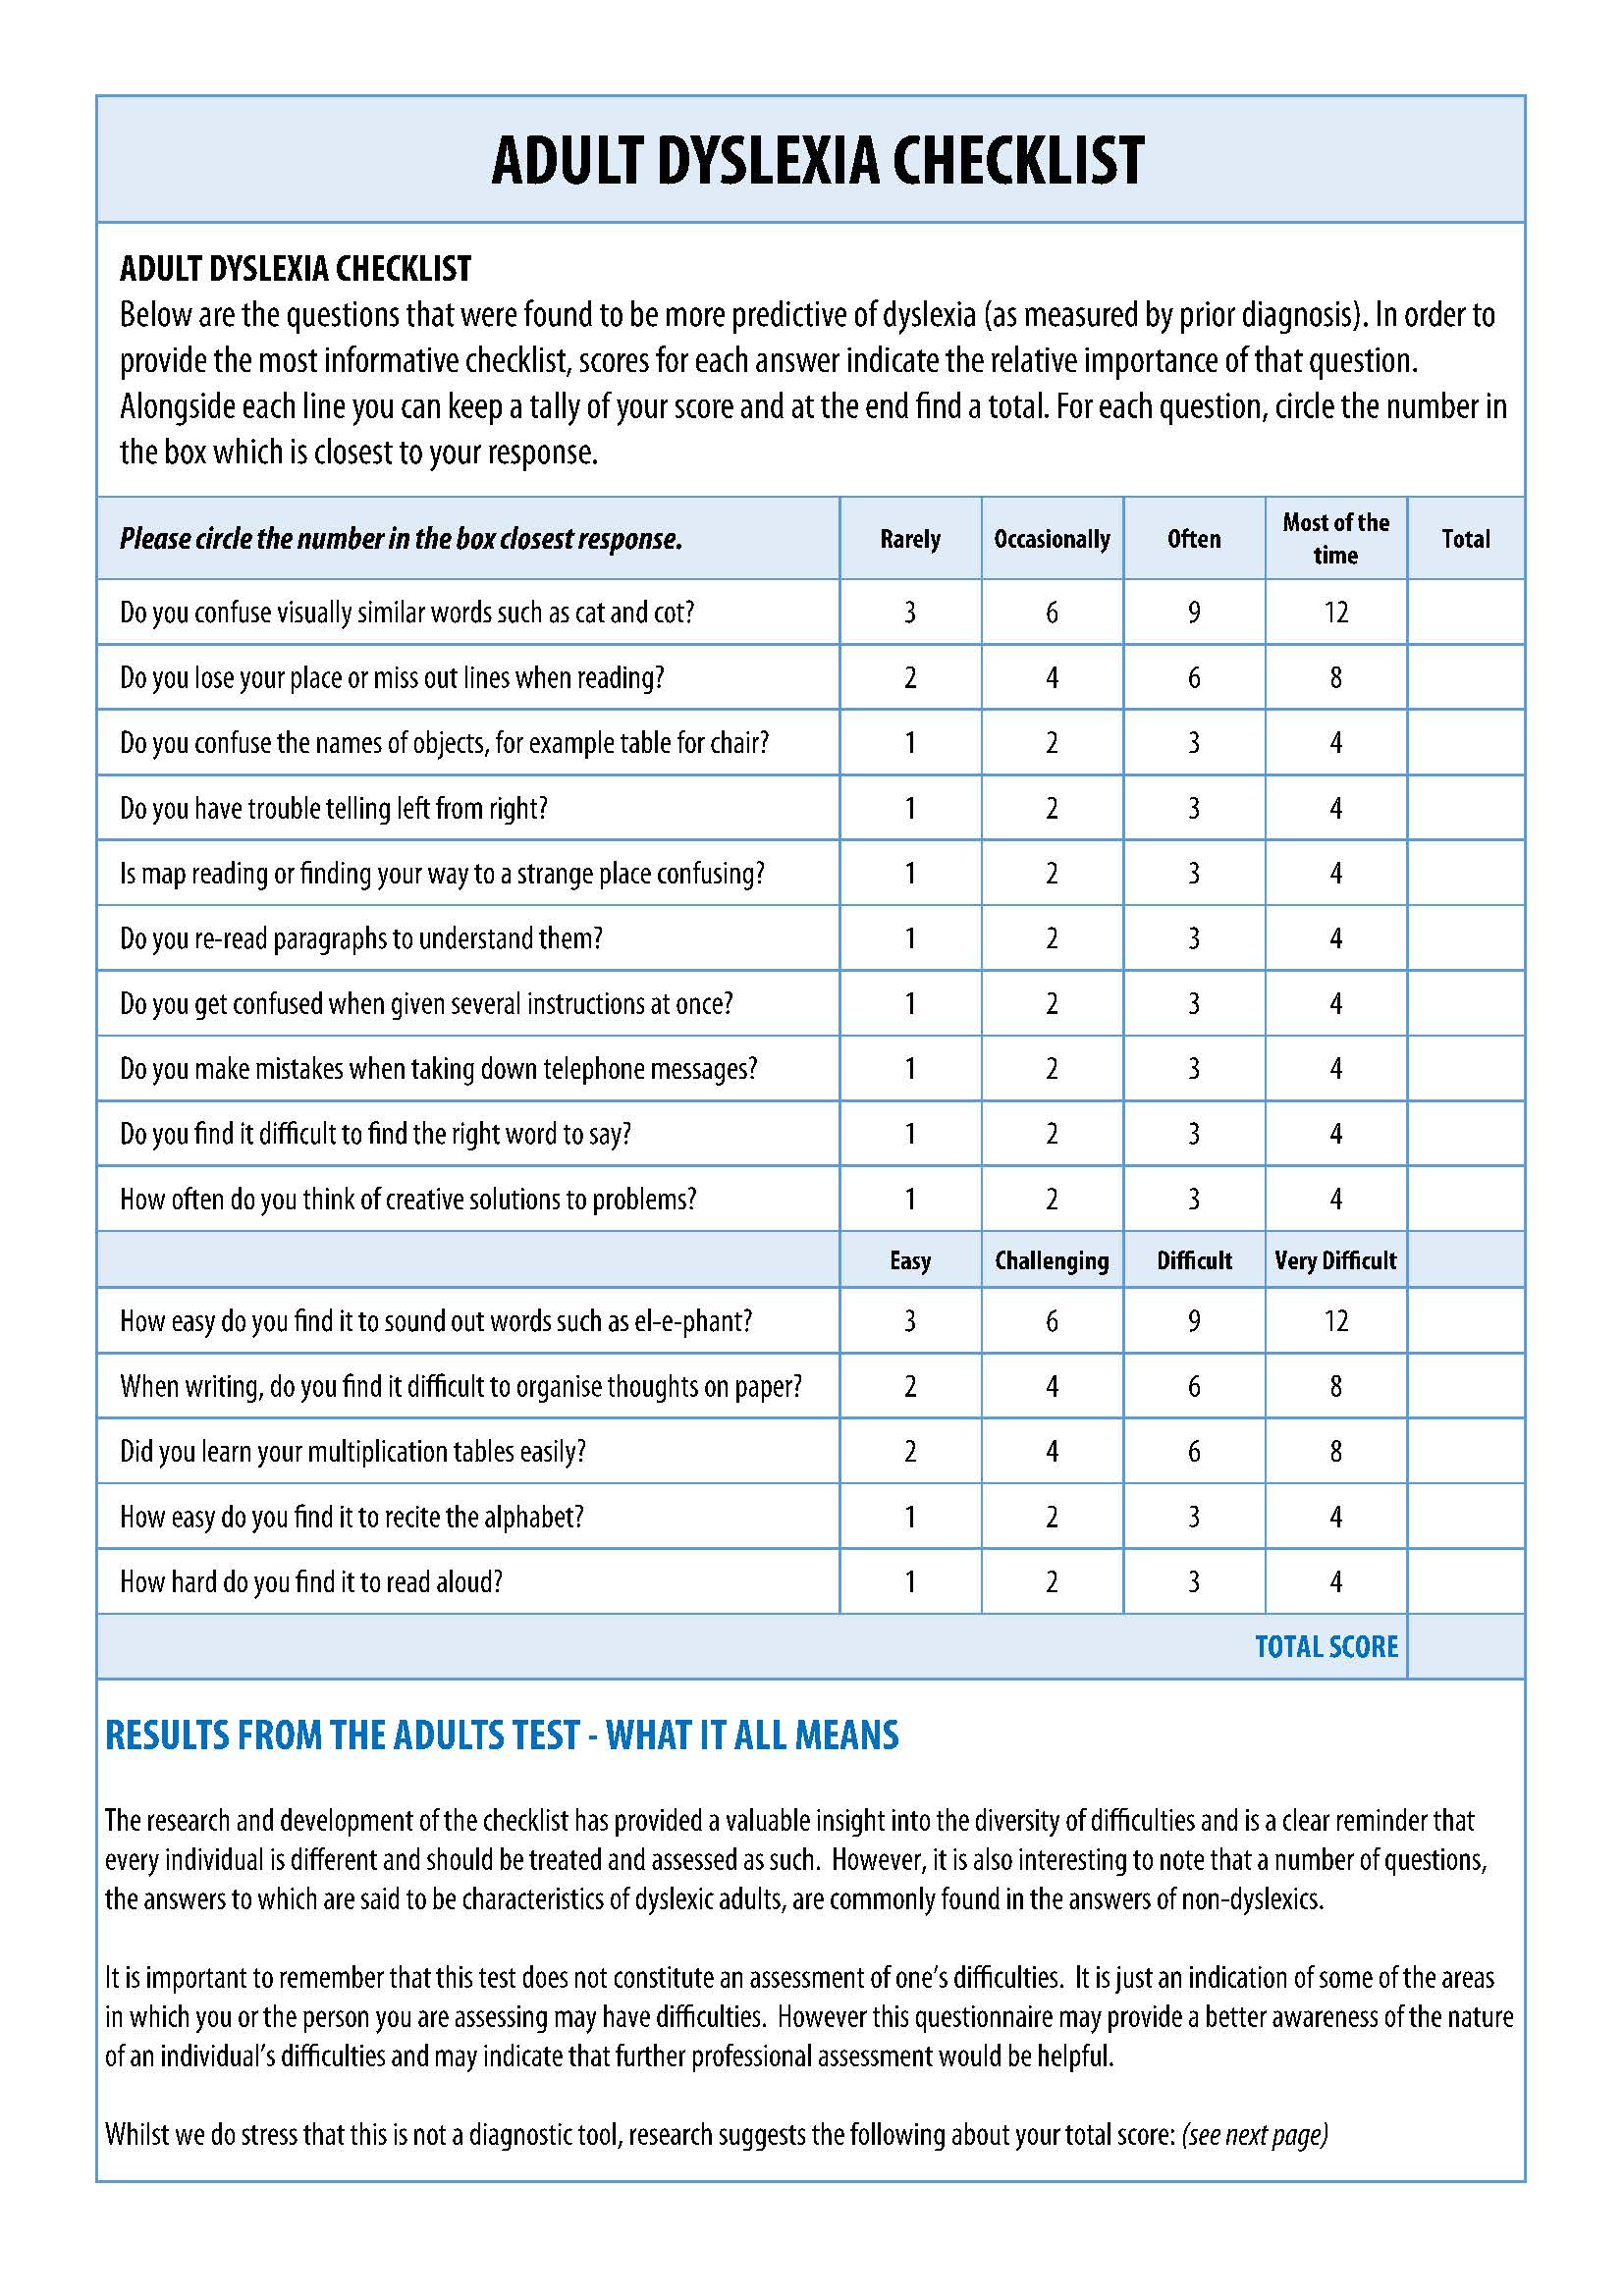 Adult Dyslexia Checklist Page 1